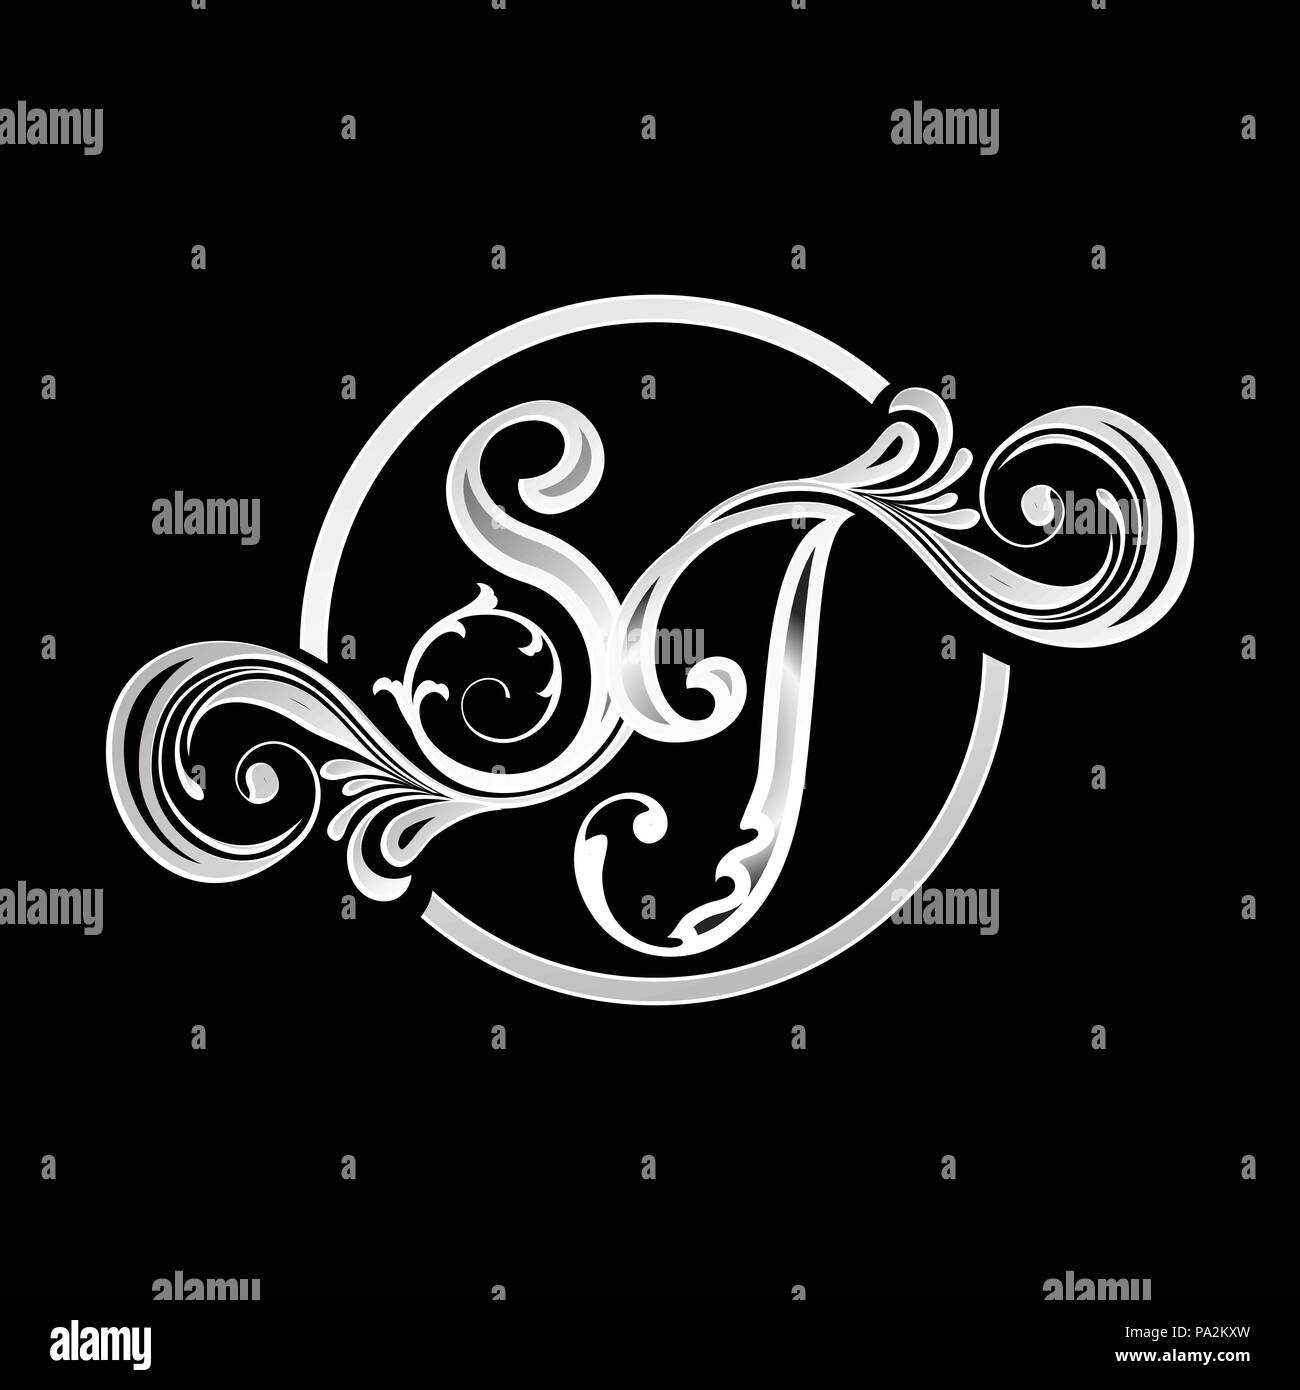 SG Initials Lettermark Ornamental Floral Vector Symbol Graphic Logo Design Template Stock Vector